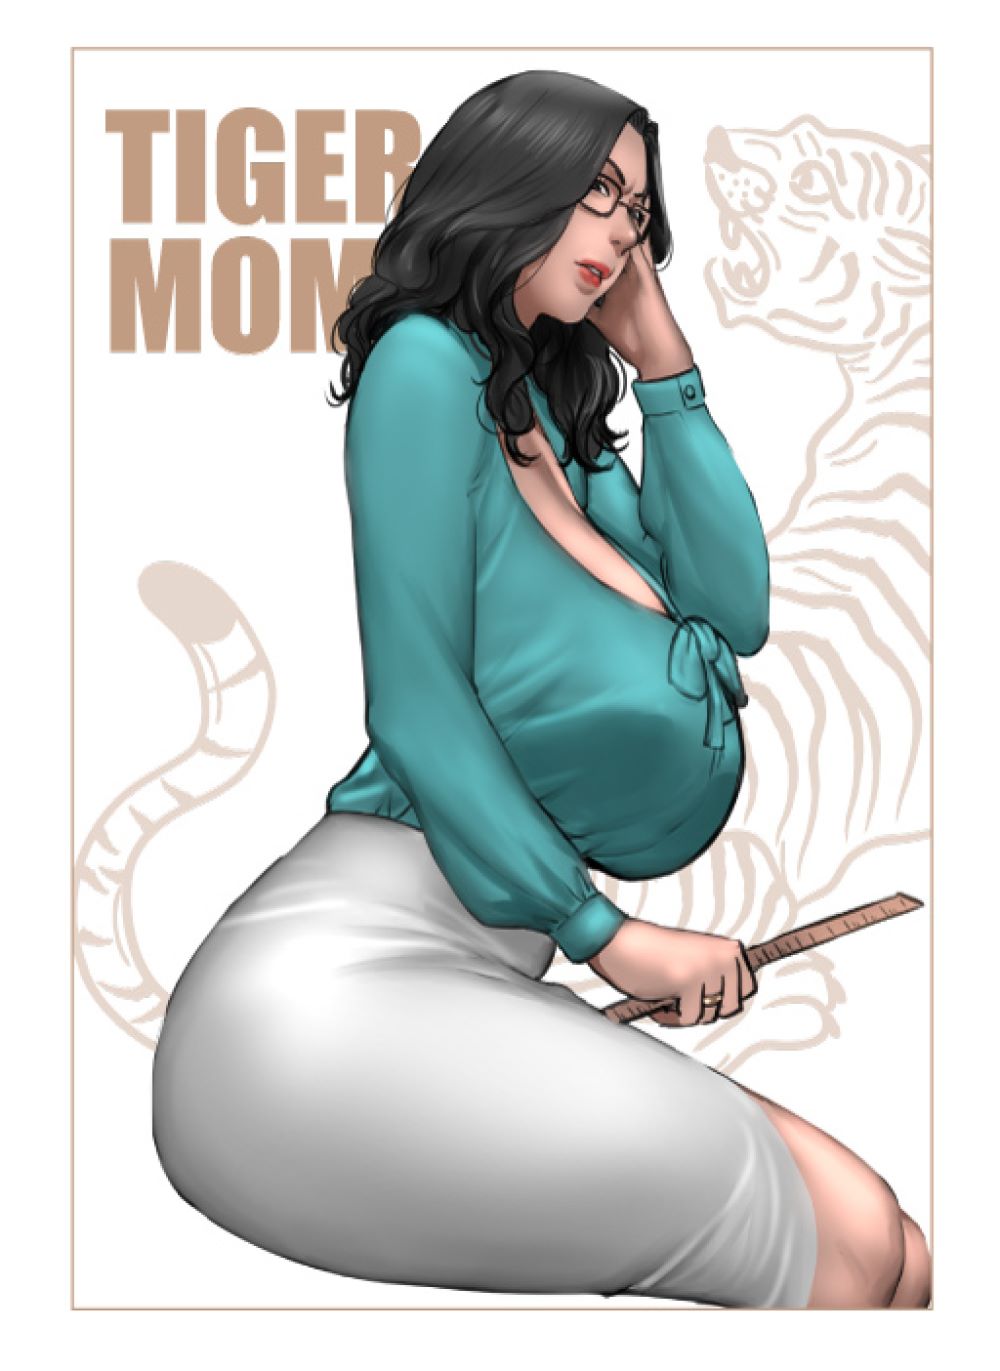 Army Mom Porn - Tiger Mom â€“ Scarlett Ann - Comics Army